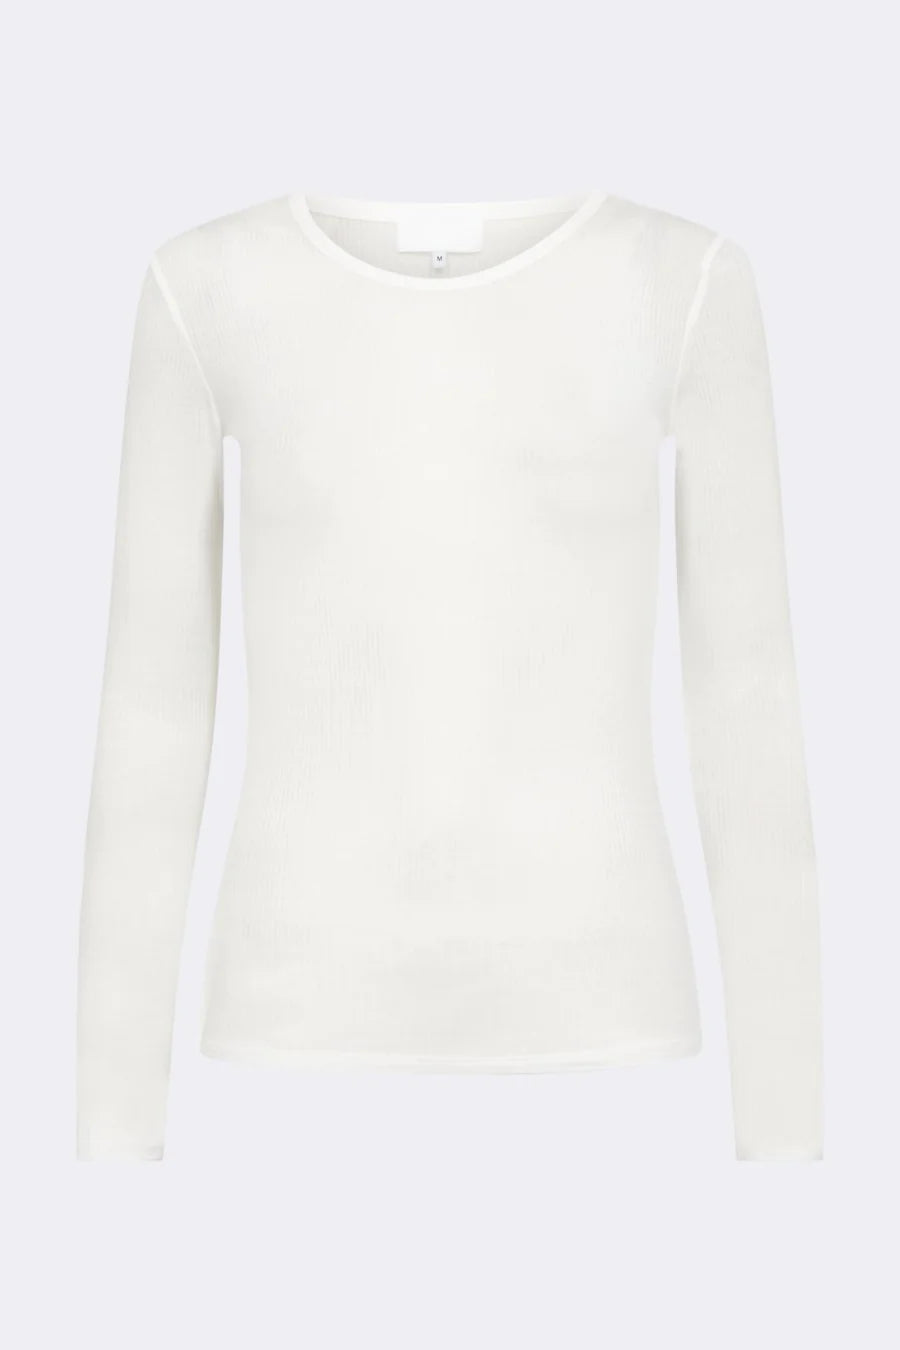 Levete Room Duffy 1 T-Shirt - Off White